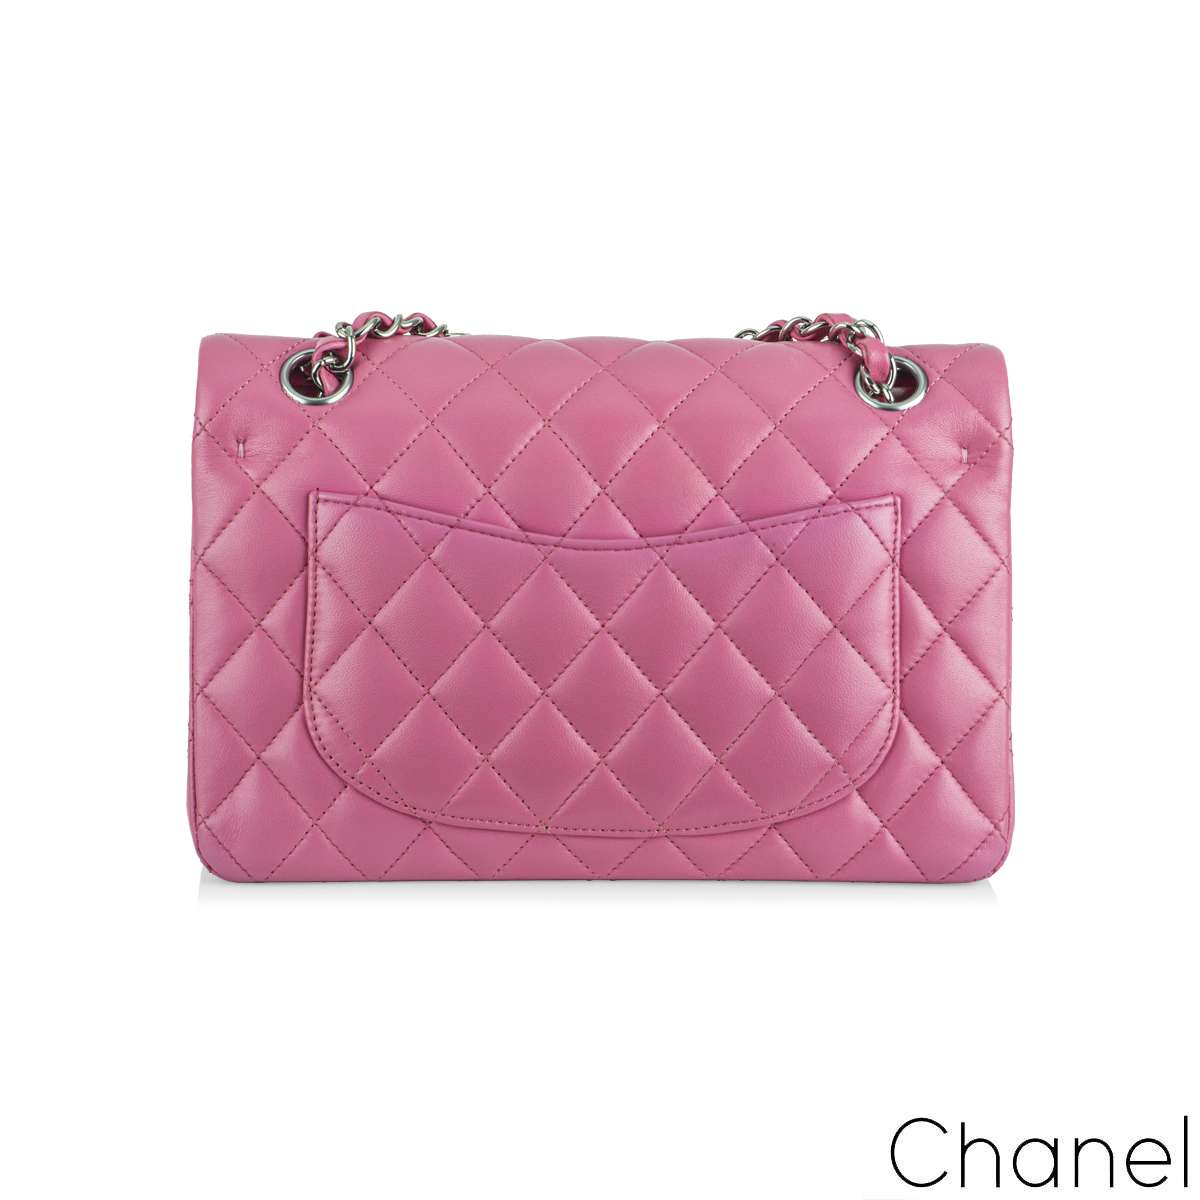 Chanel Fuchsia Pink Lambskin Classic Small Flap Bag